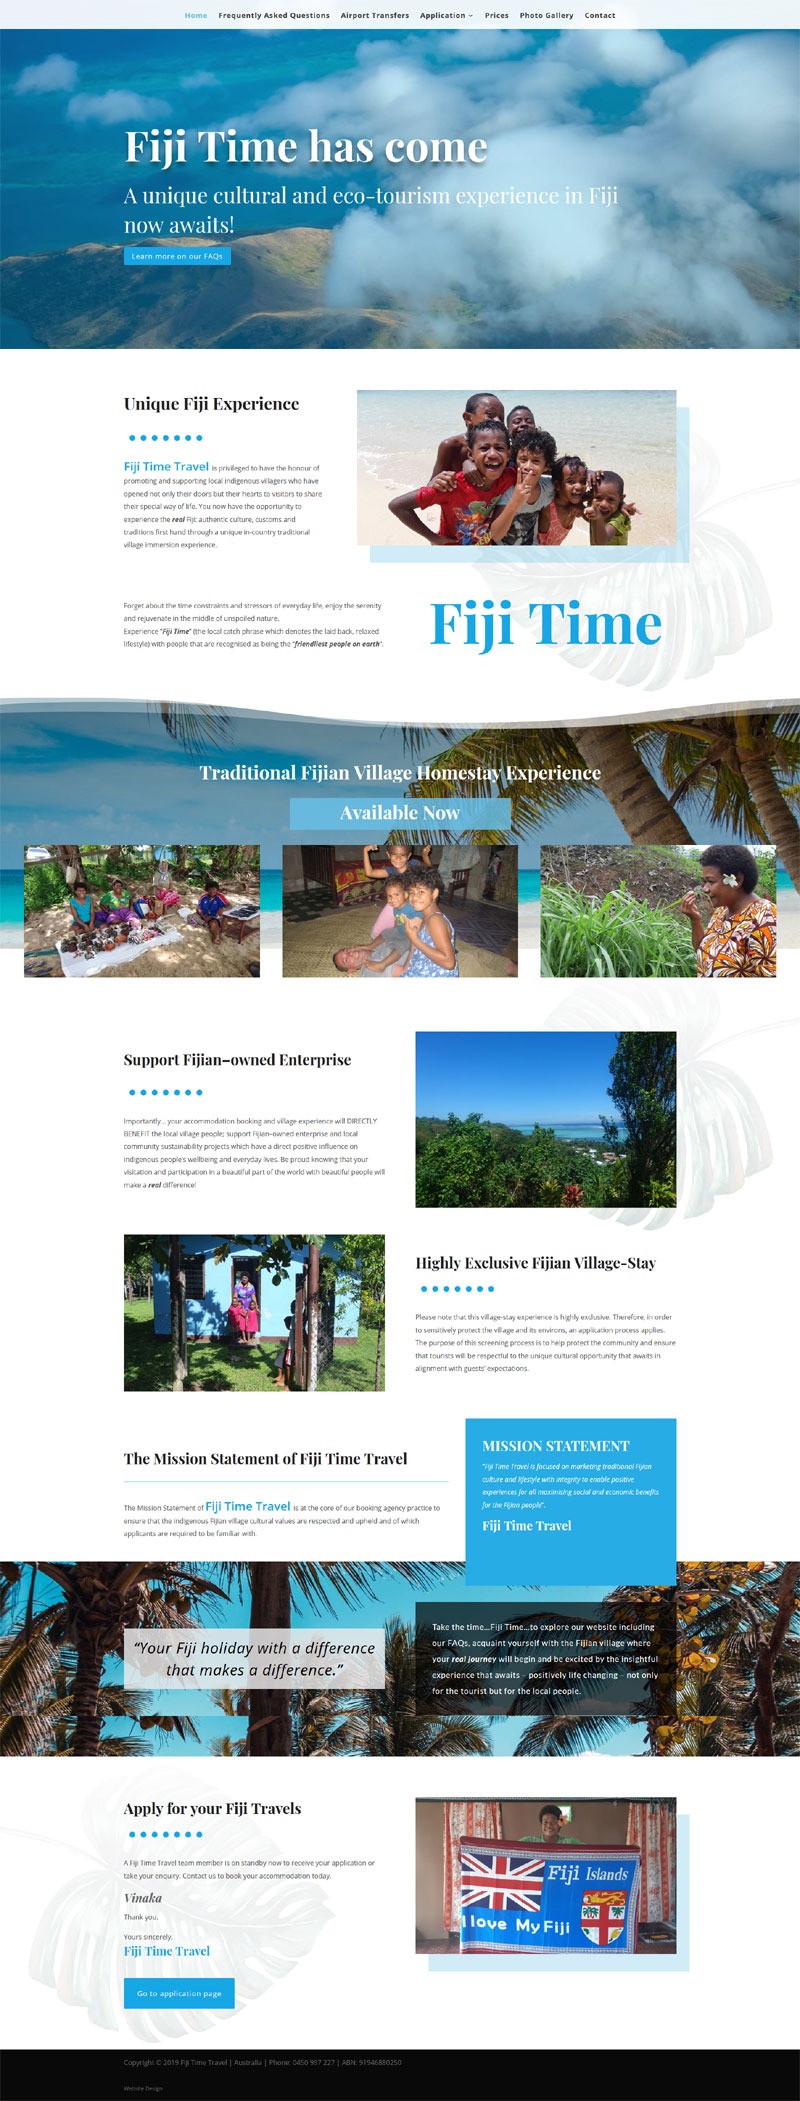 website design for fiji time travel agency cultural eco-tourism